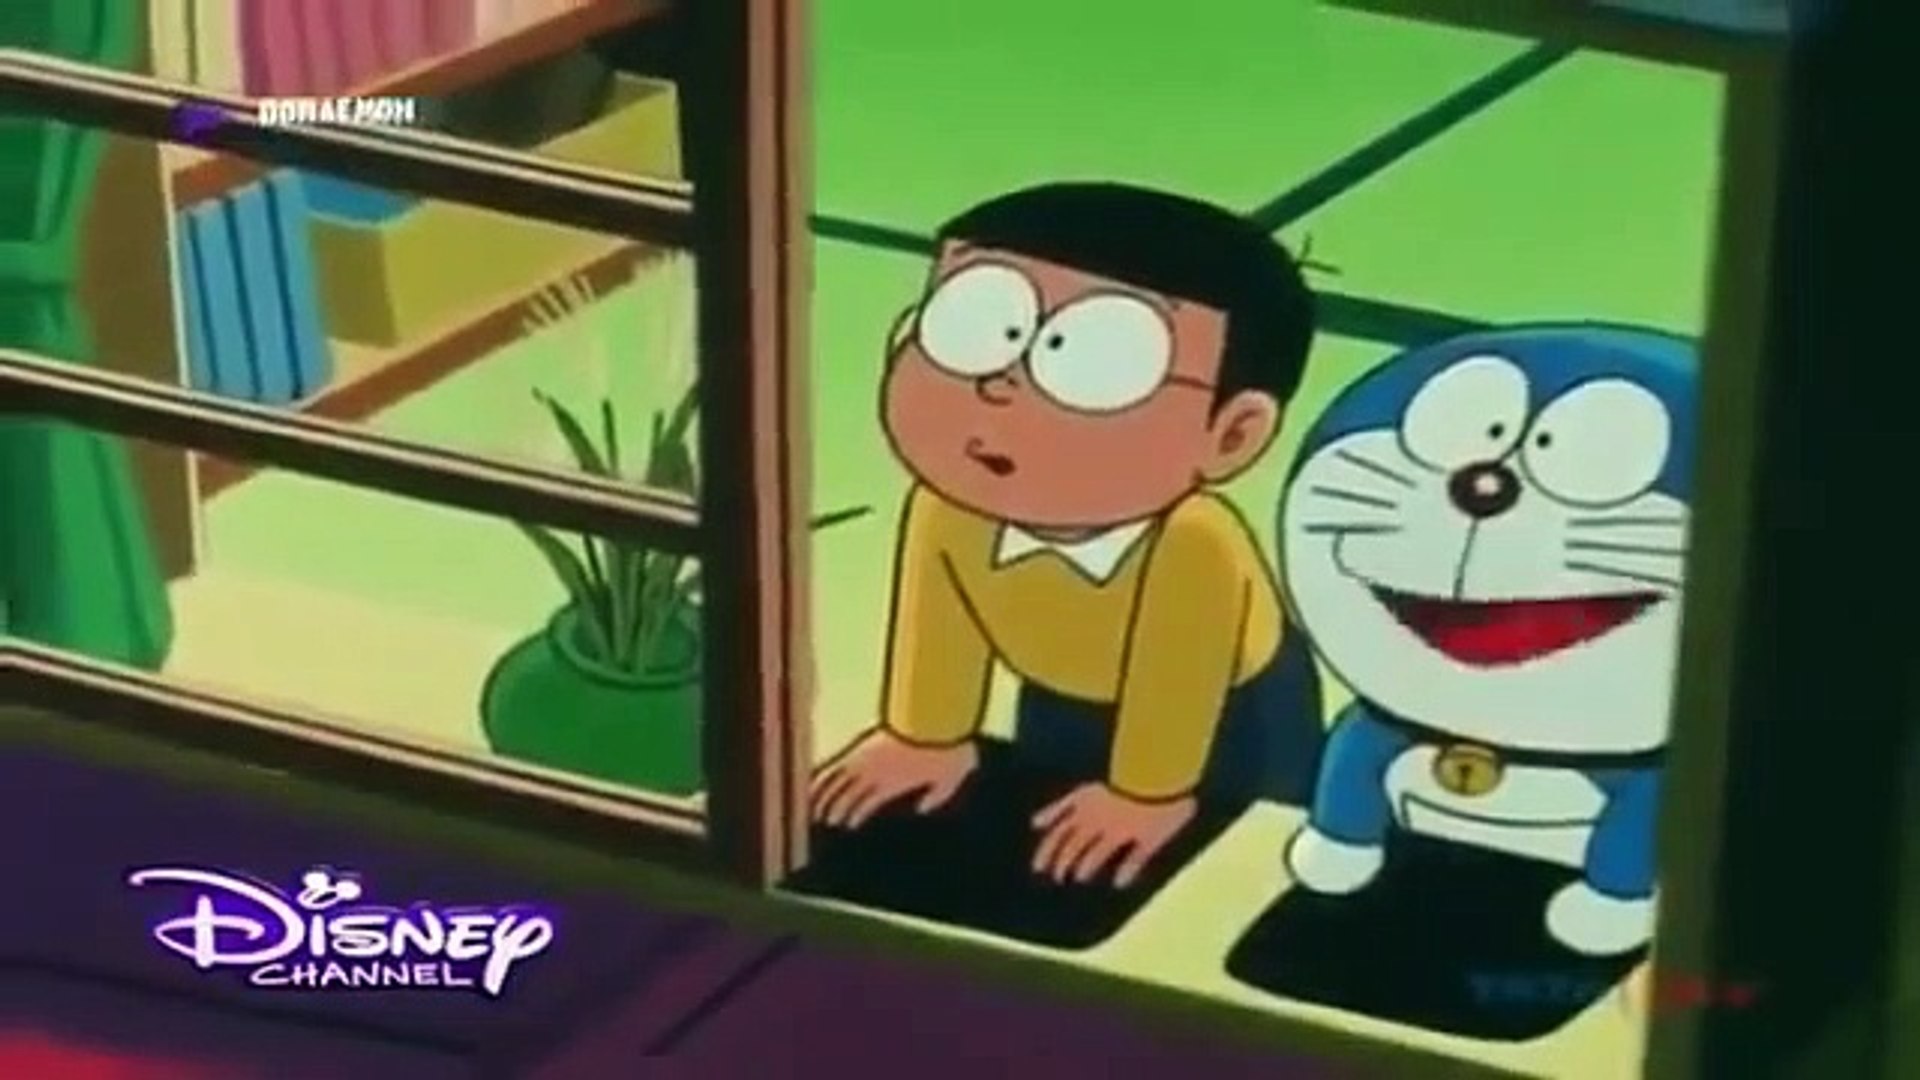 Doraemon in hindi new episode 2017 - Nobita or Doraemon mirror world mein -  latest episode 2017 - video Dailymotion